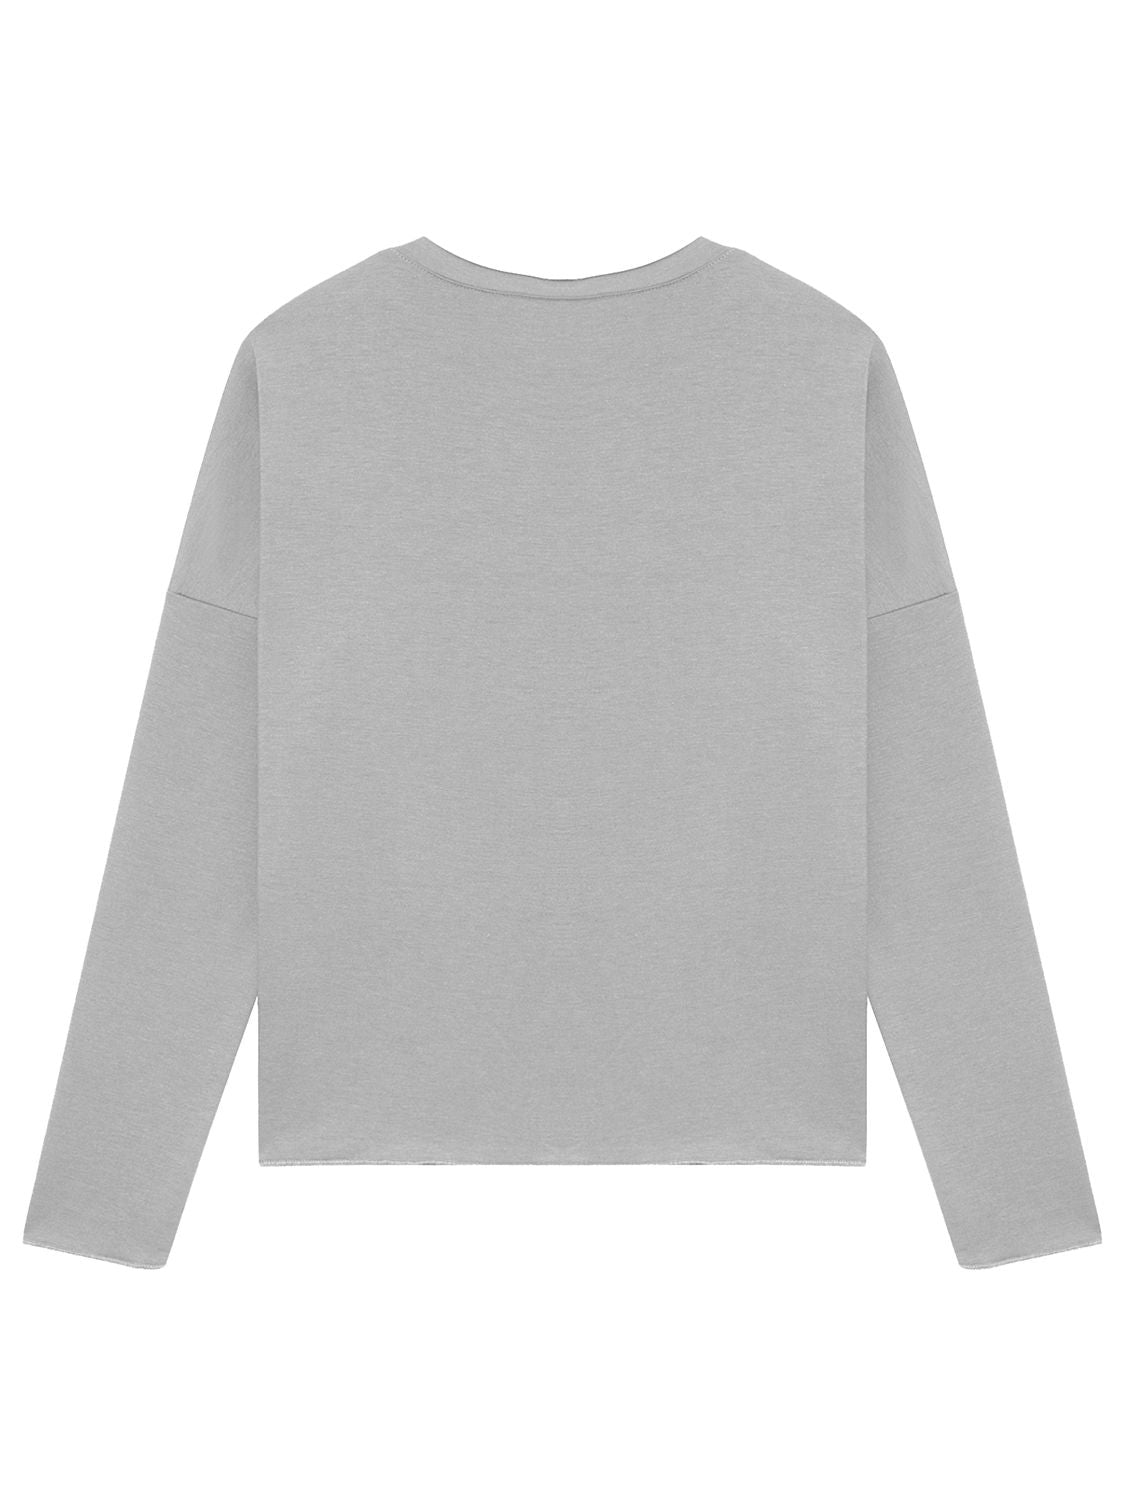 Women's Full Size Graphic Round Neck Dropped Shoulder Sweatshirt